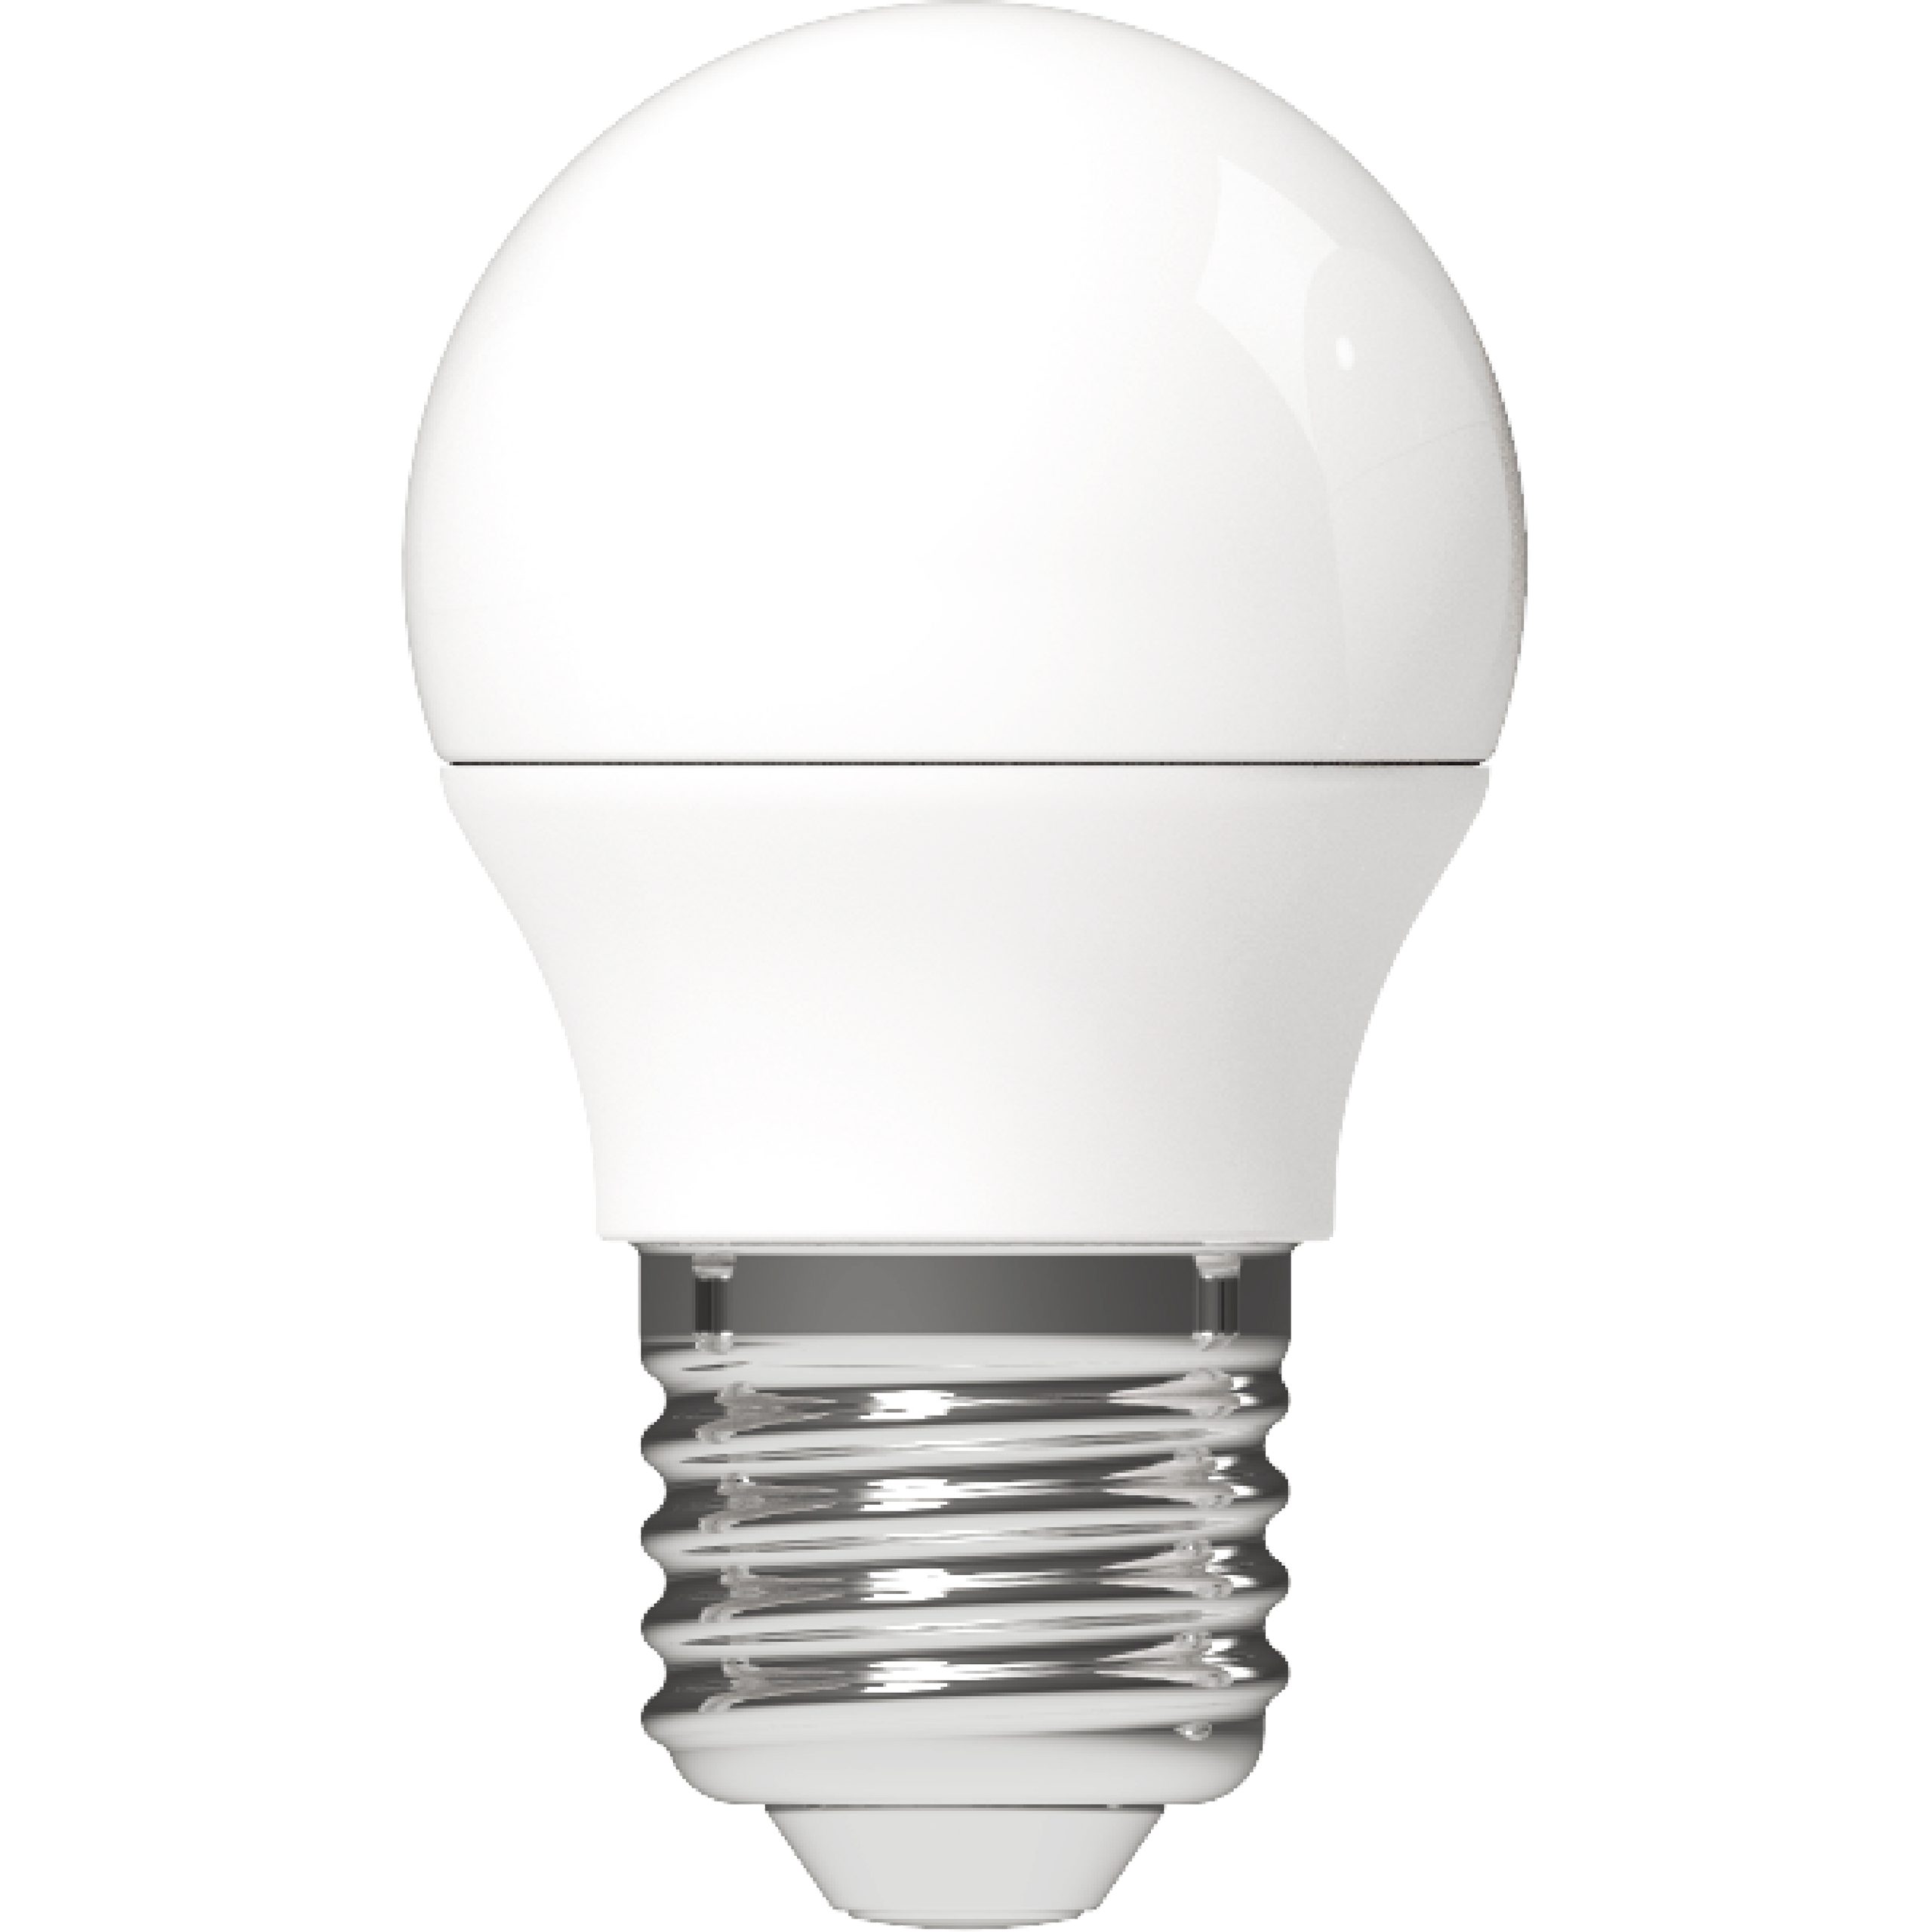 LED's light LED-Leuchtmittel 0620111 LED Kugel, E27, E27 2.5W warmweiß Opal G45 | Leuchtmittel